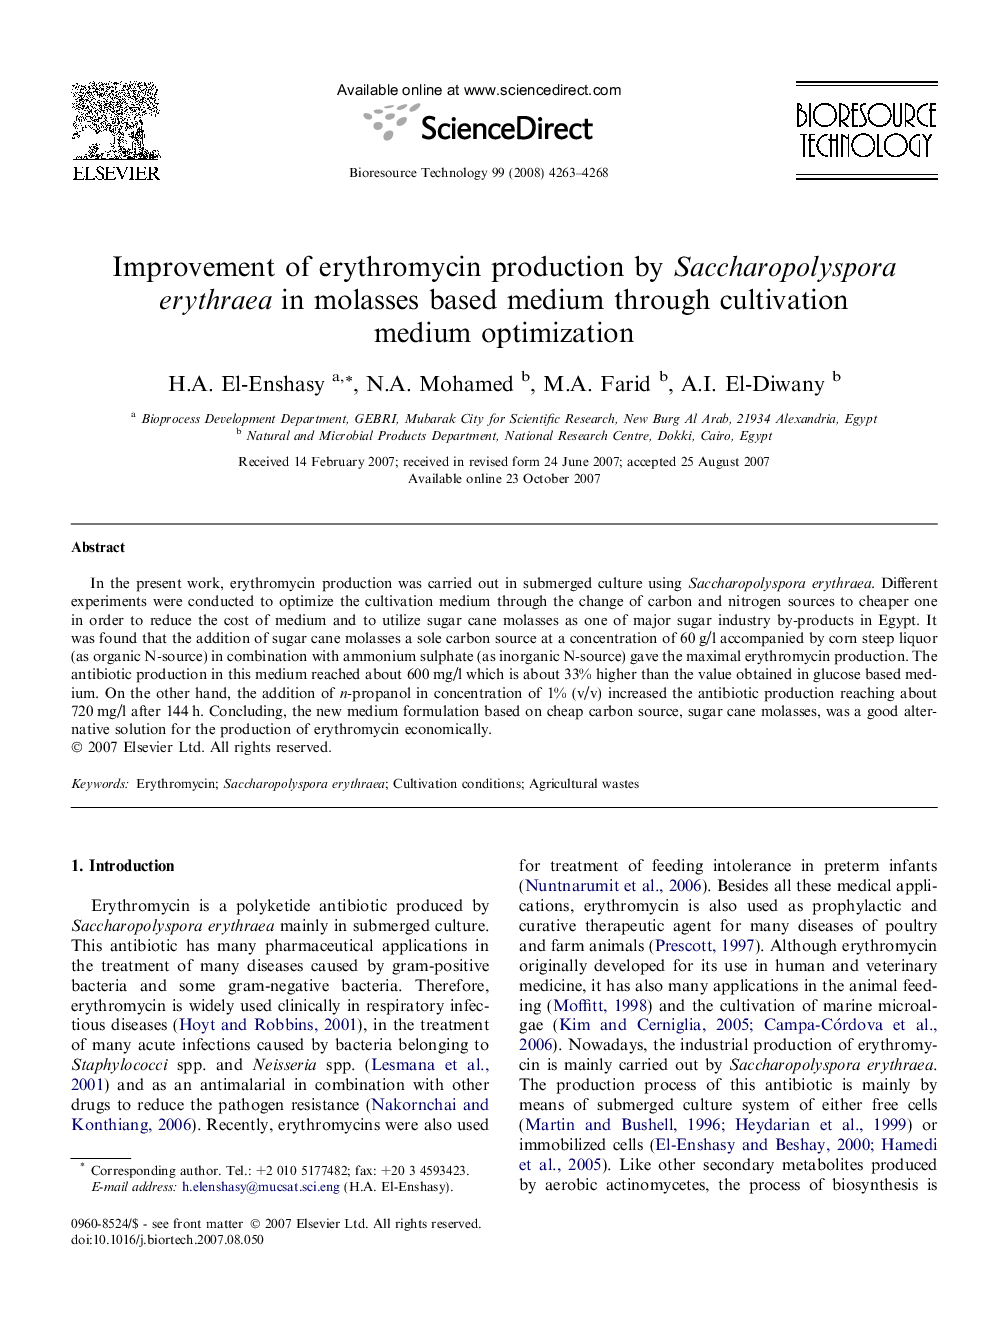 Improvement of erythromycin production by Saccharopolyspora erythraea in molasses based medium through cultivation medium optimization